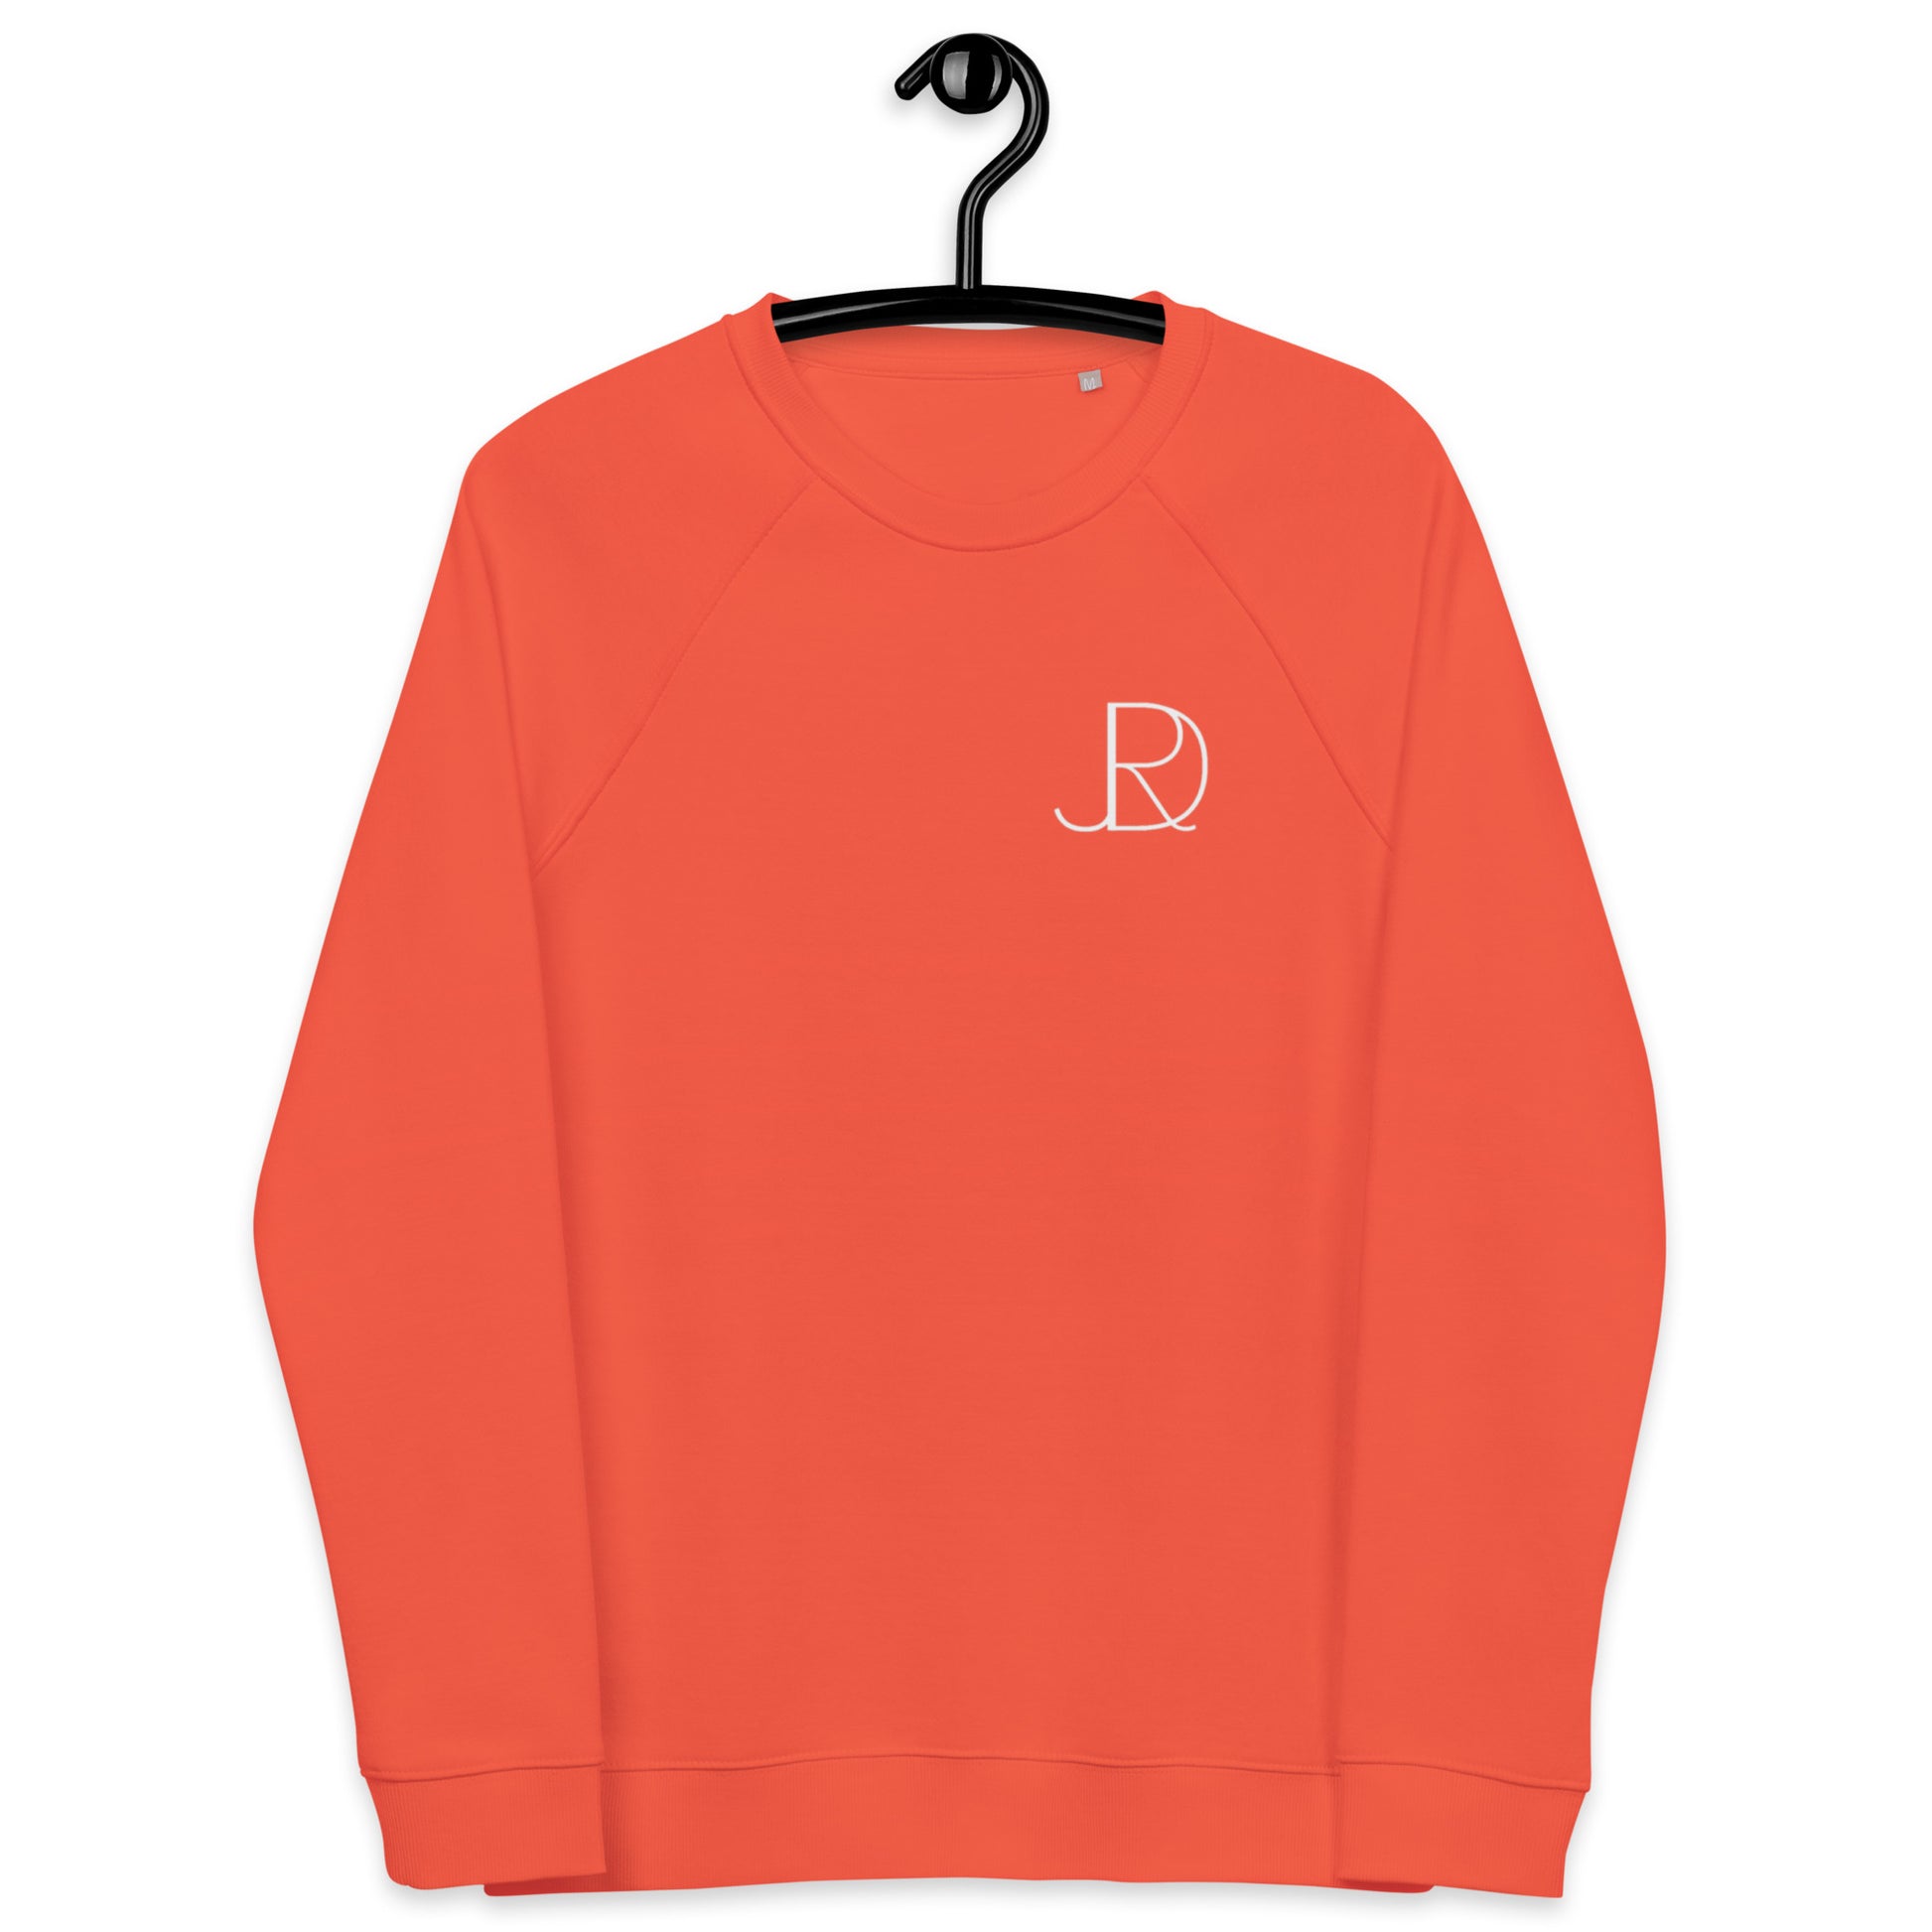 JRD sweatshirt Burnt Orange